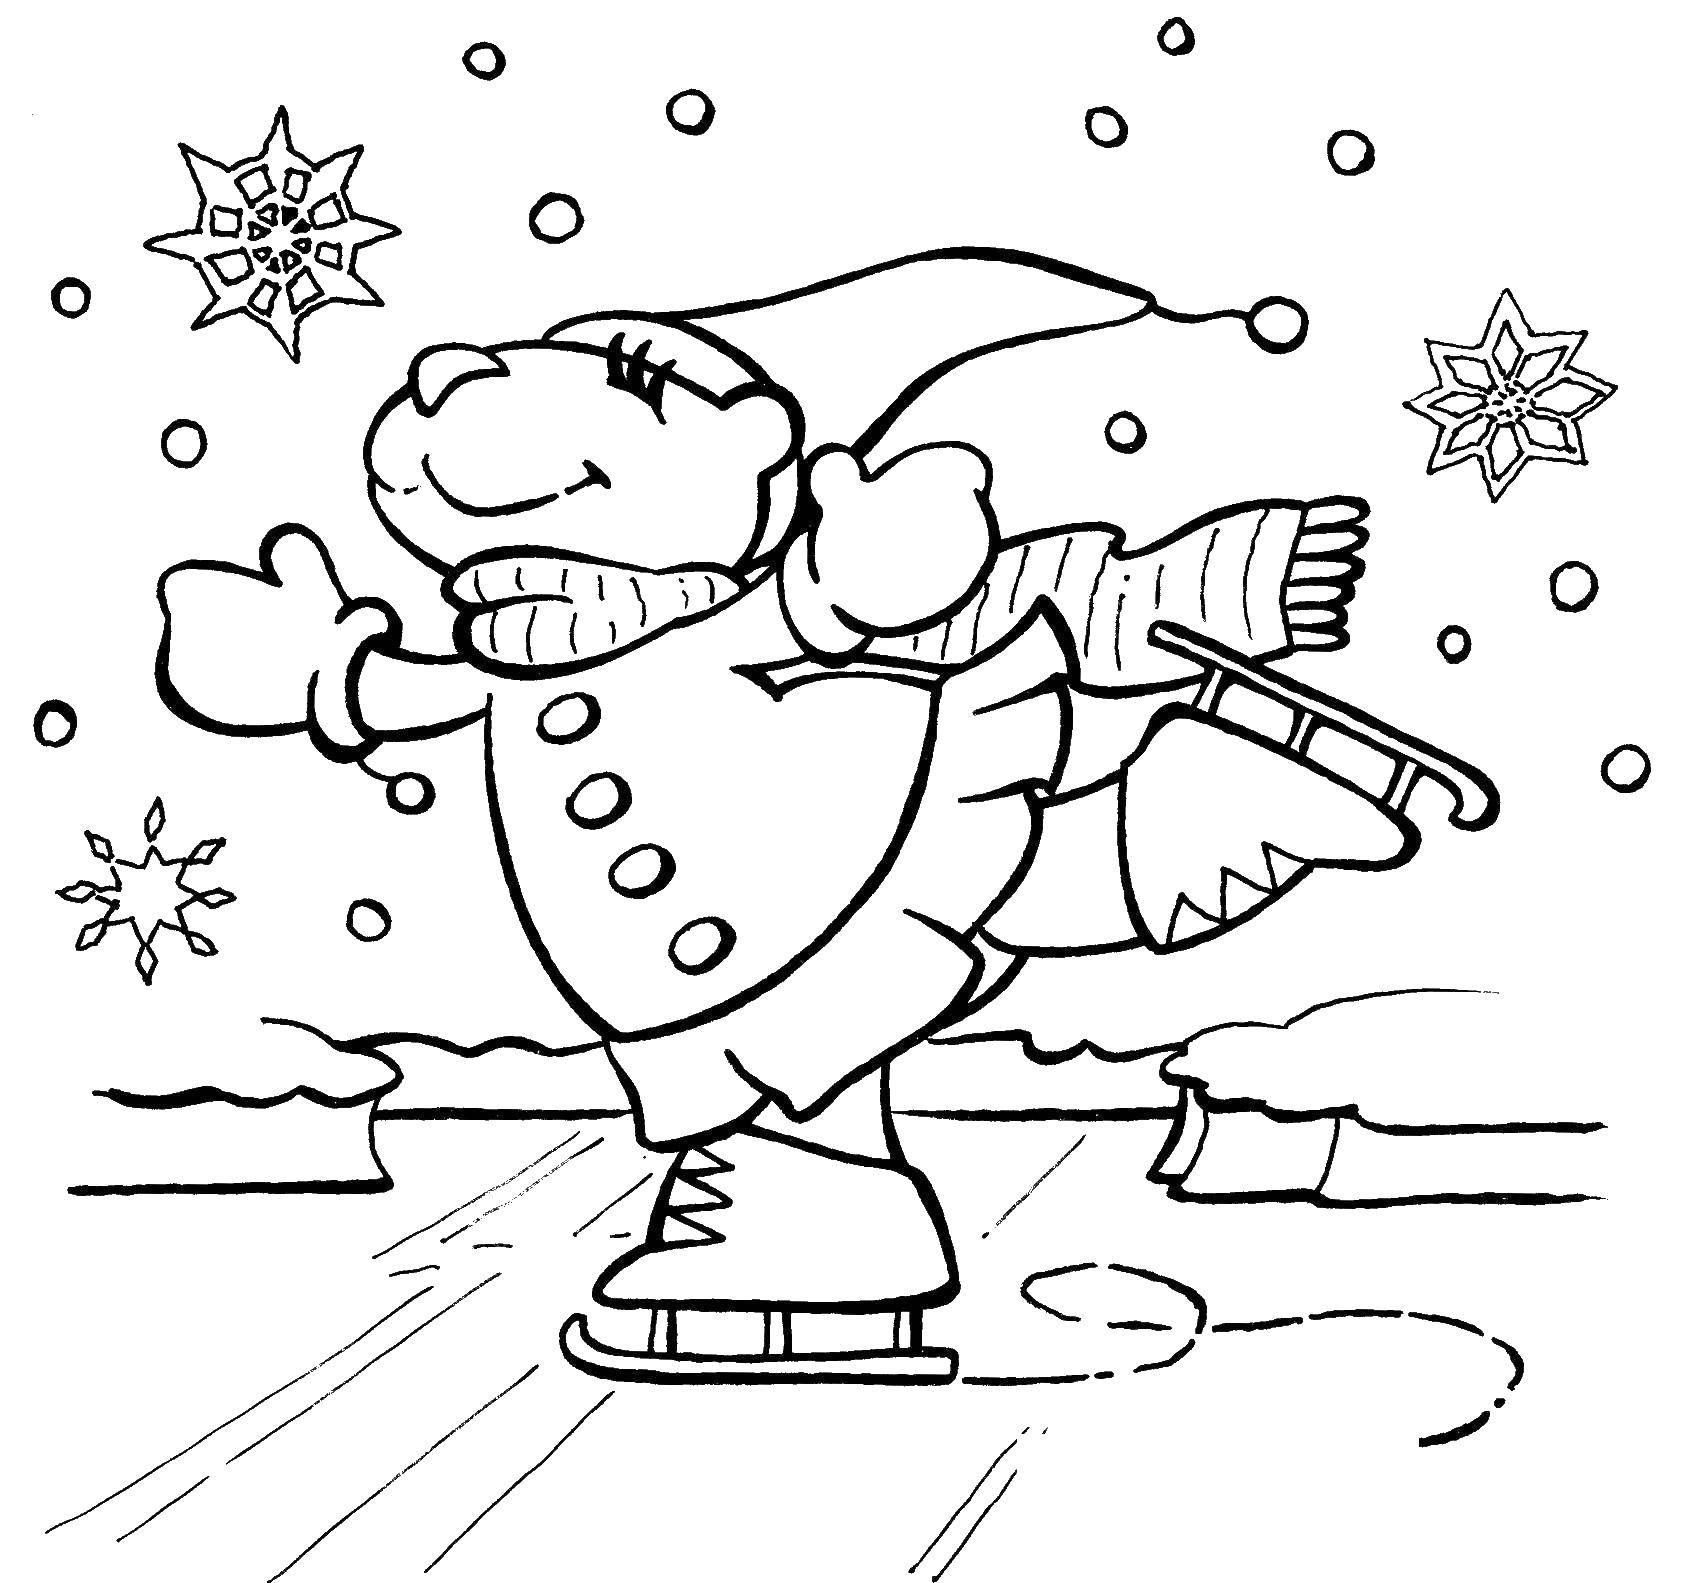 Название: Раскраска Катание на коньках. Категория: раскраски зима. Теги: коньки, дети.